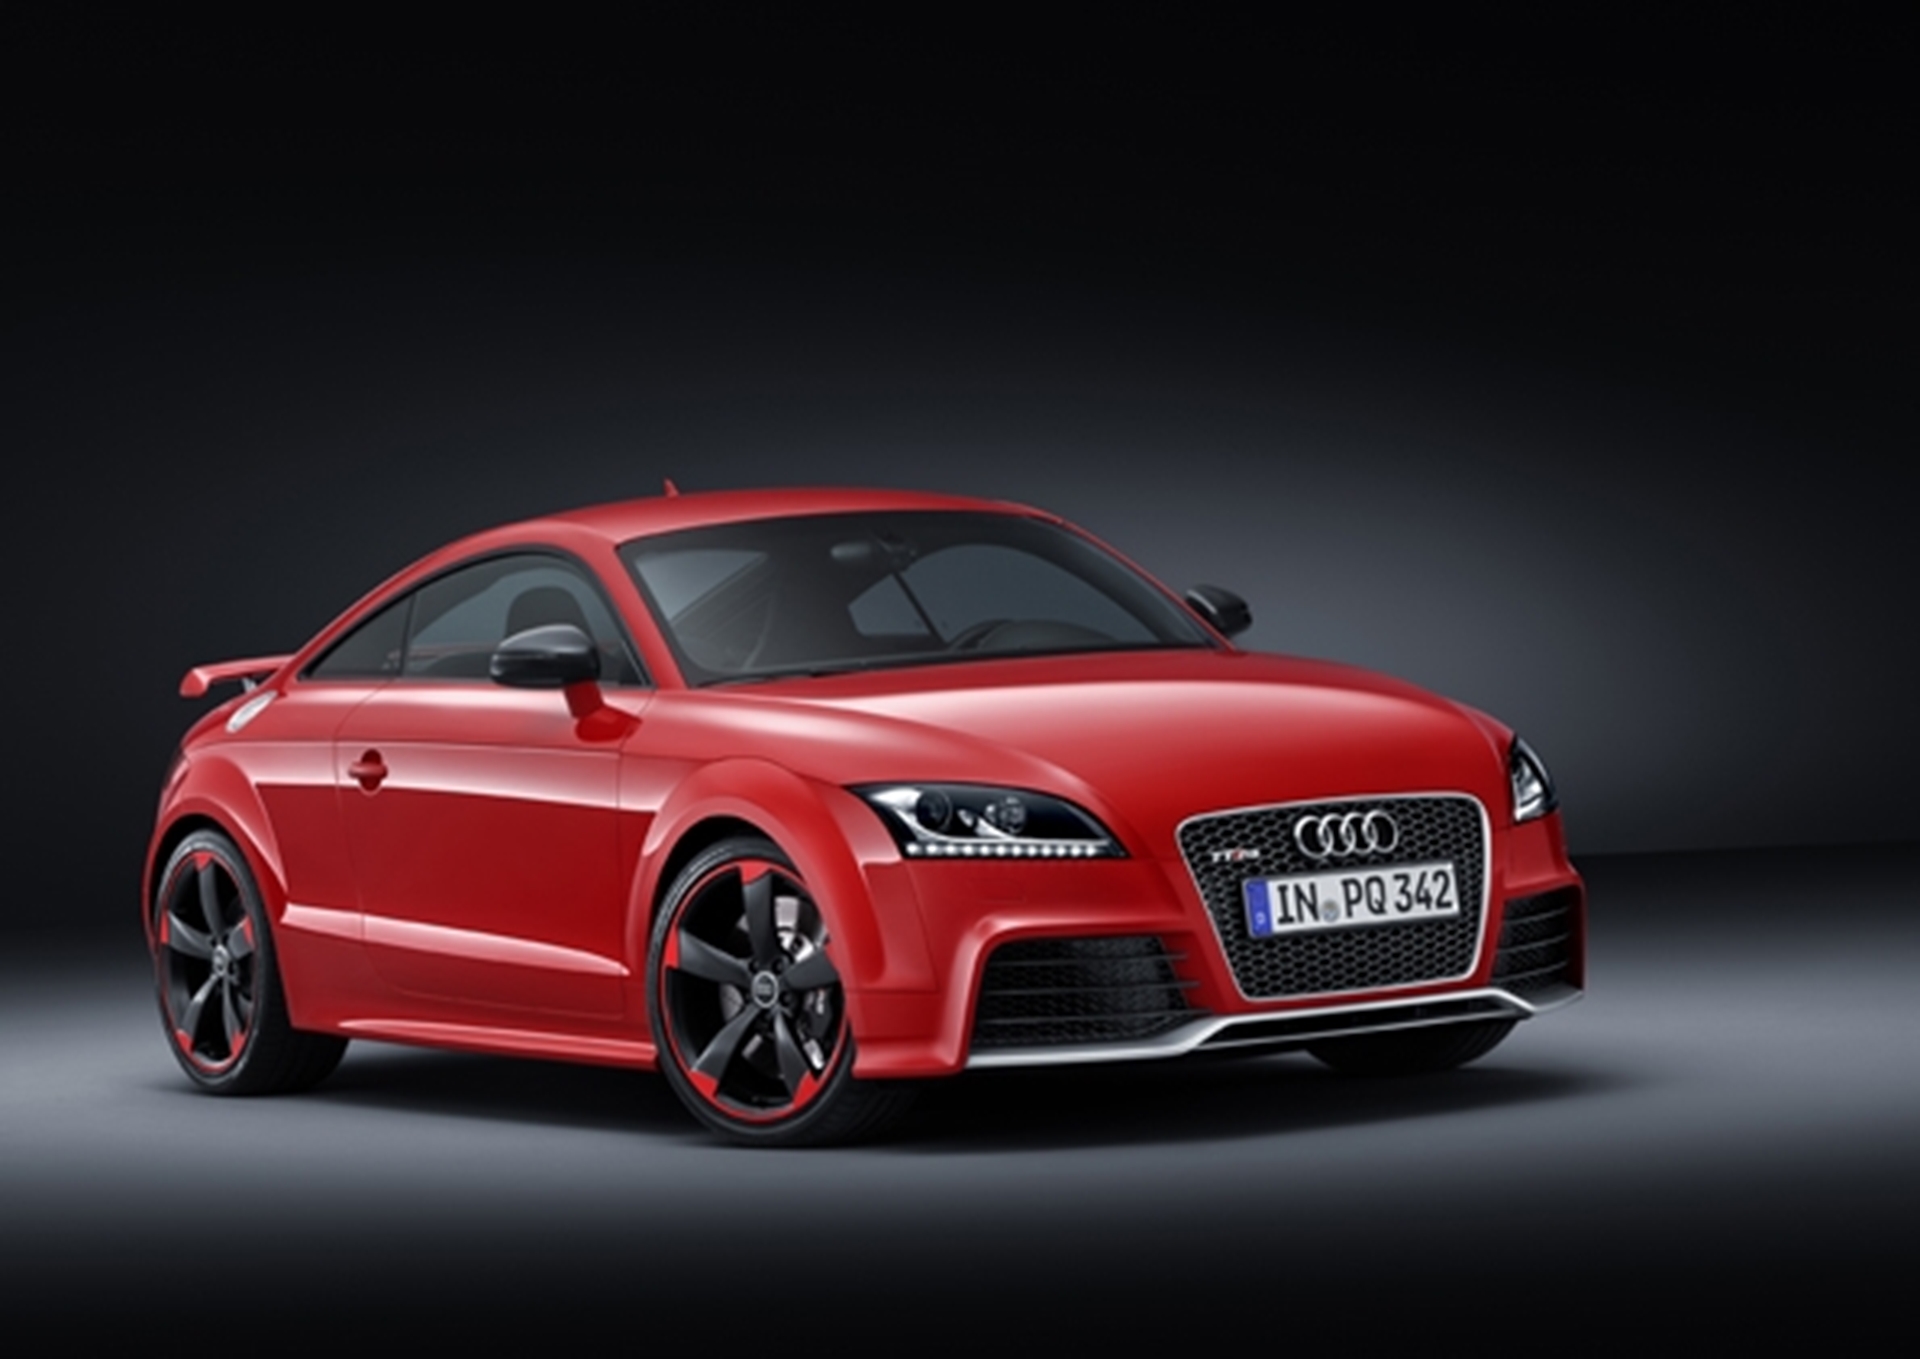 Even more dynamic: the Audi TT RS plus